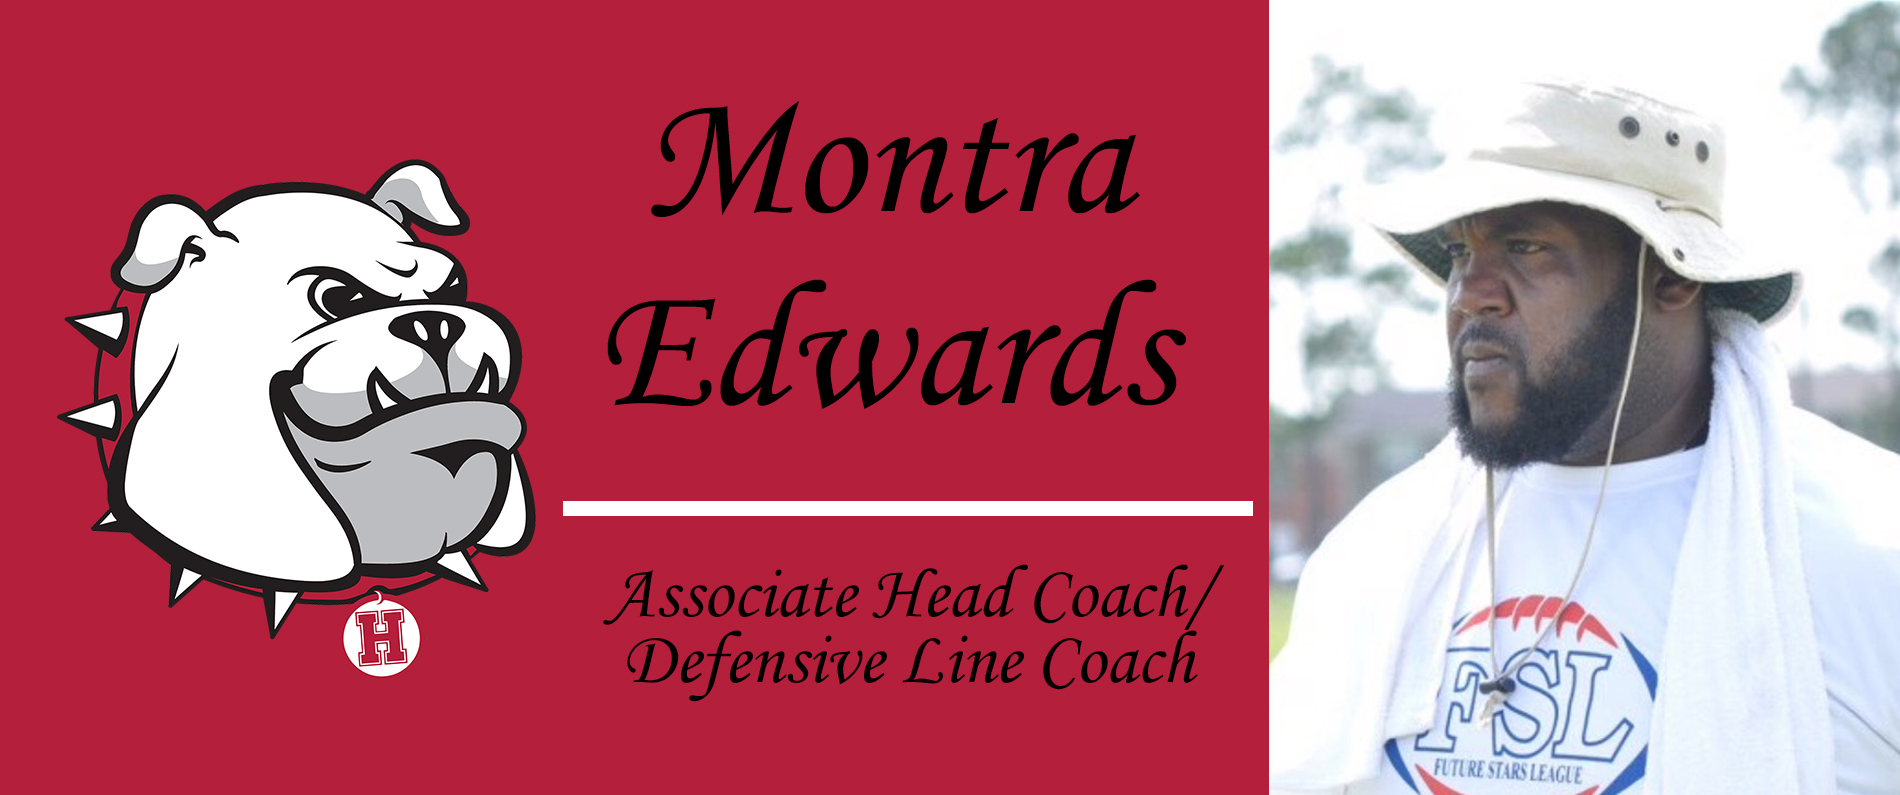 Edwards named associate head coach/defensive line coach